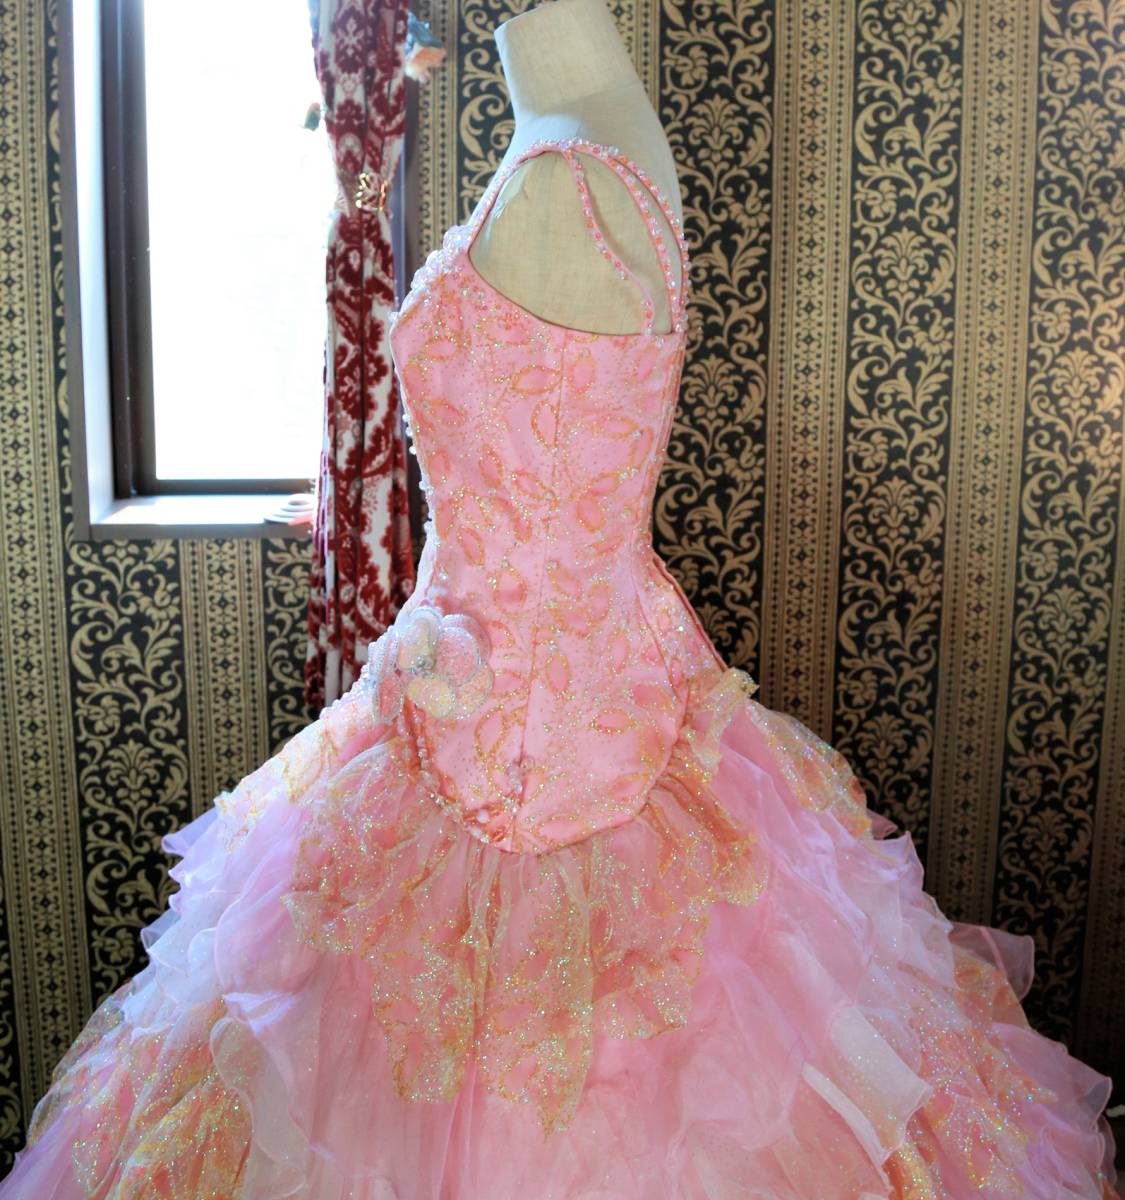 Sugar keishuga- Kei high class wedding dress 7 number S size pink yellow group color dress 